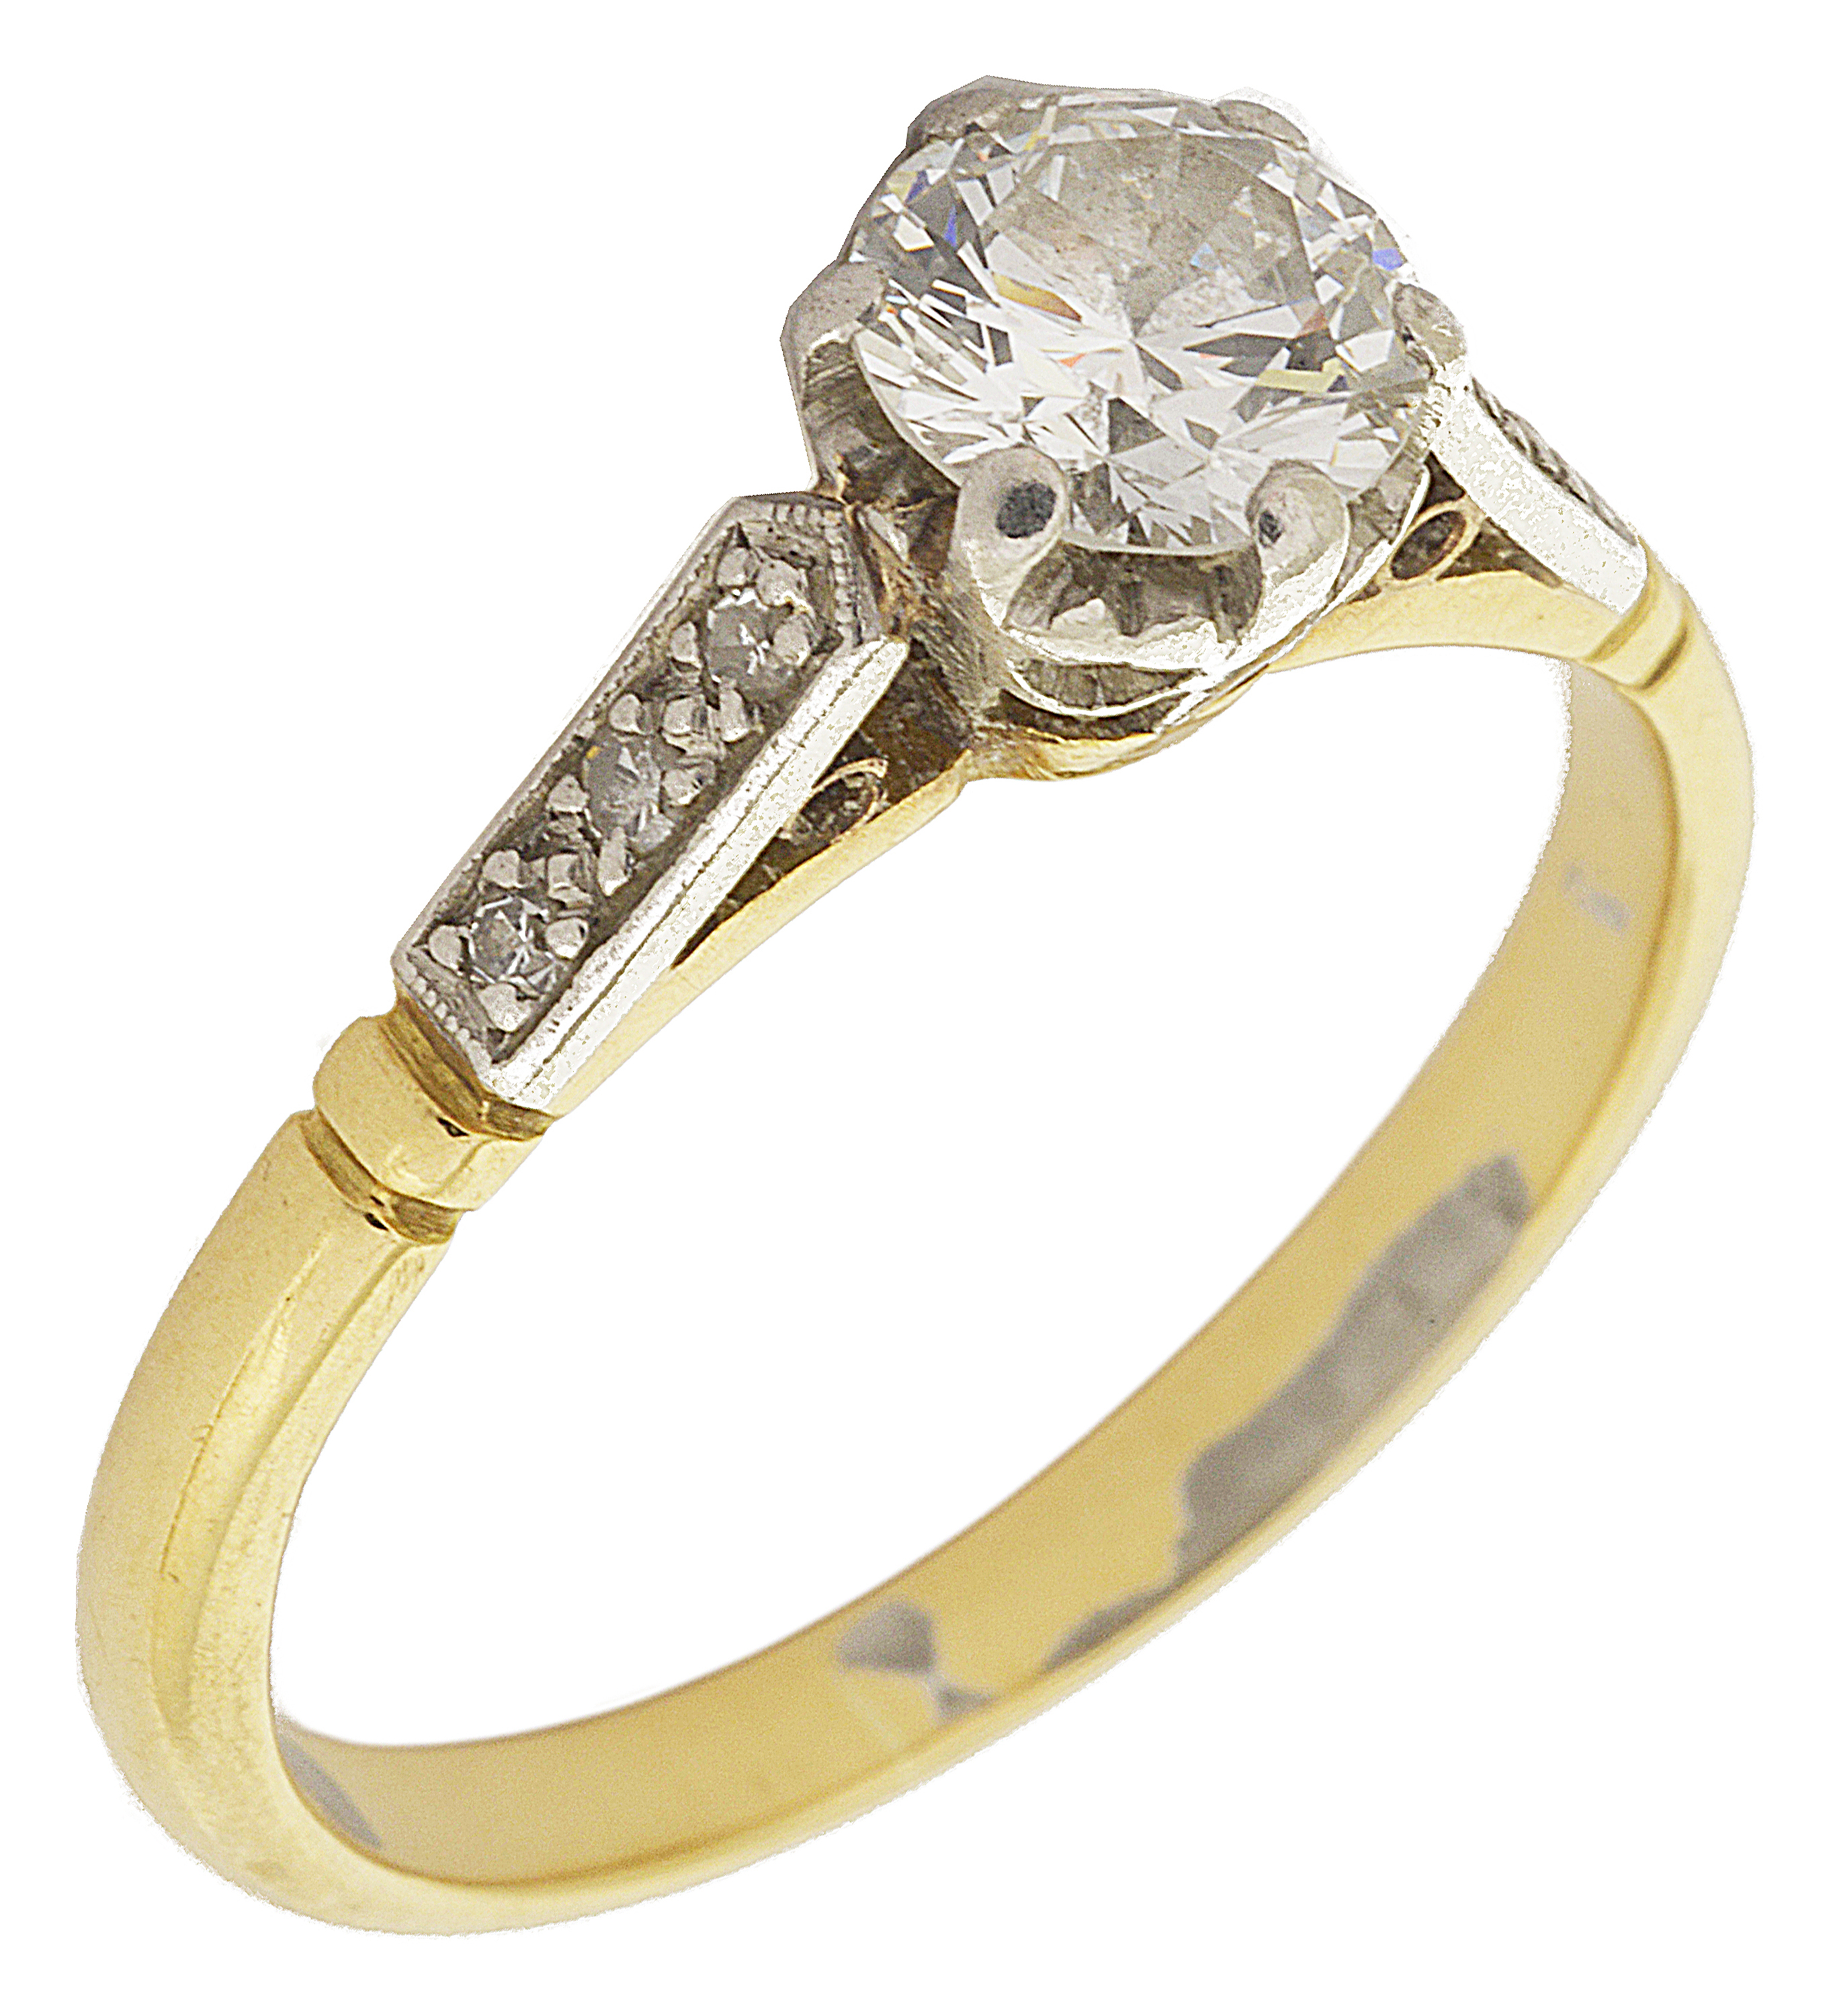 A single stone diamond set ring, the diamond approx. 0.45 ct. set between diamond point detailed